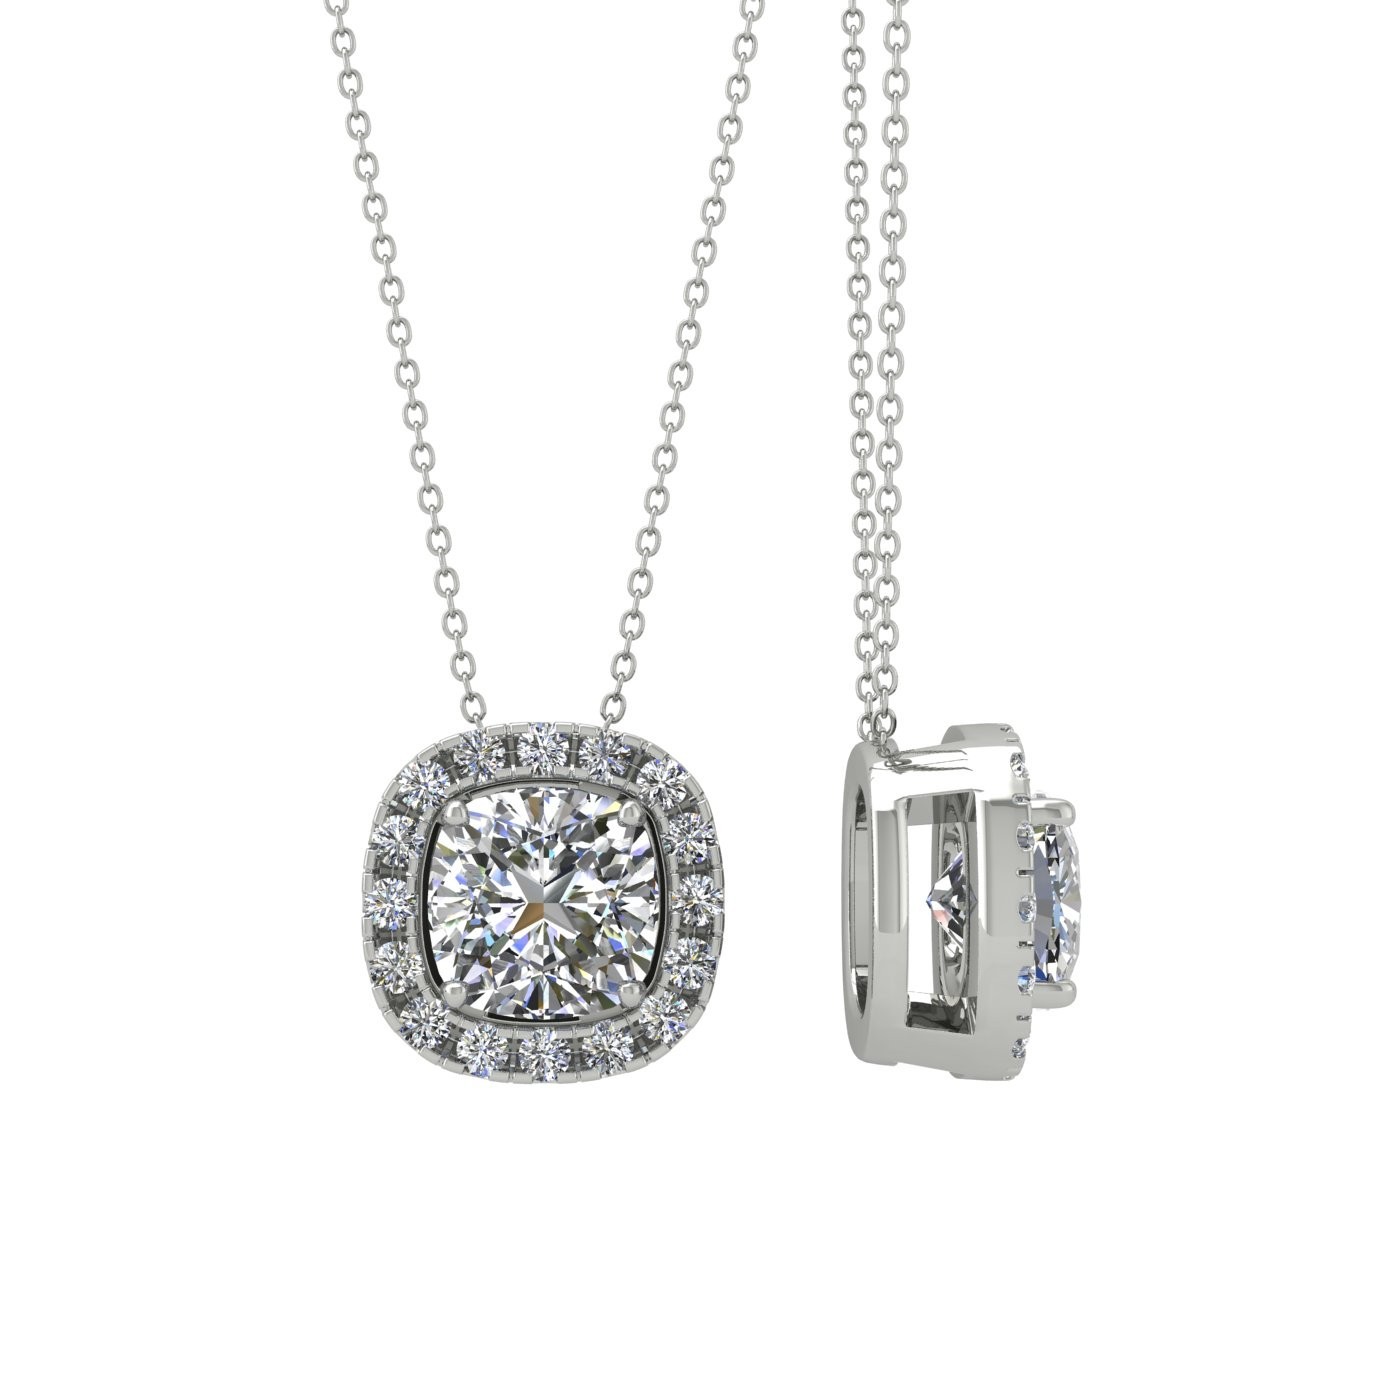 18k white gold 1 ct 4 prongs cushion shape diamond pendant with diamond pavÉ set halo